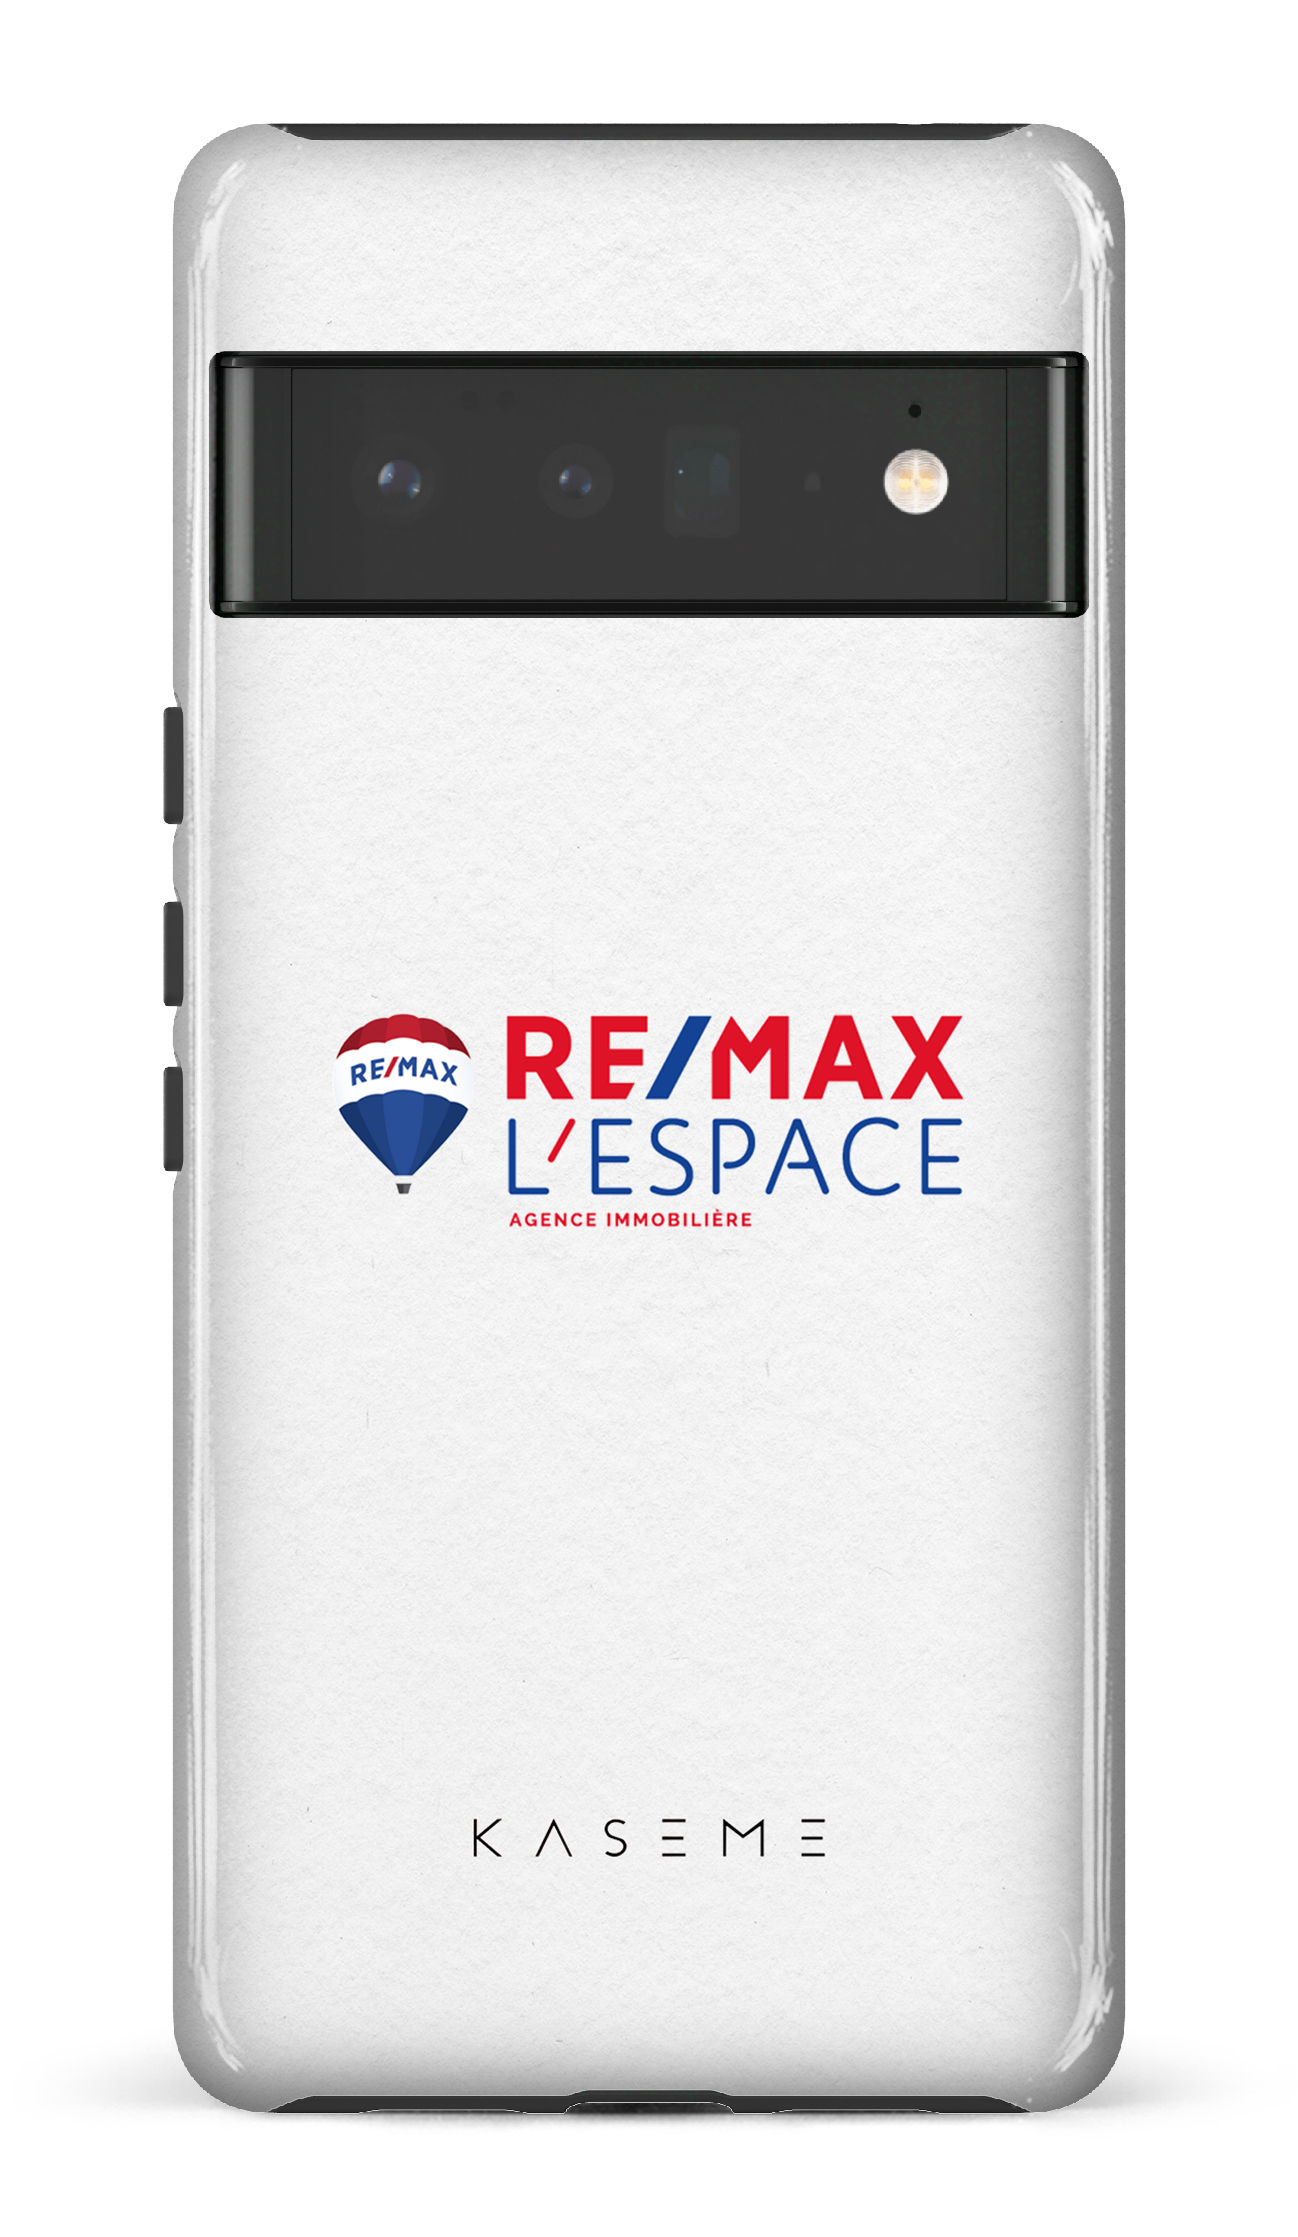 Remax L'Espace Blanc - Google Pixel 6 pro